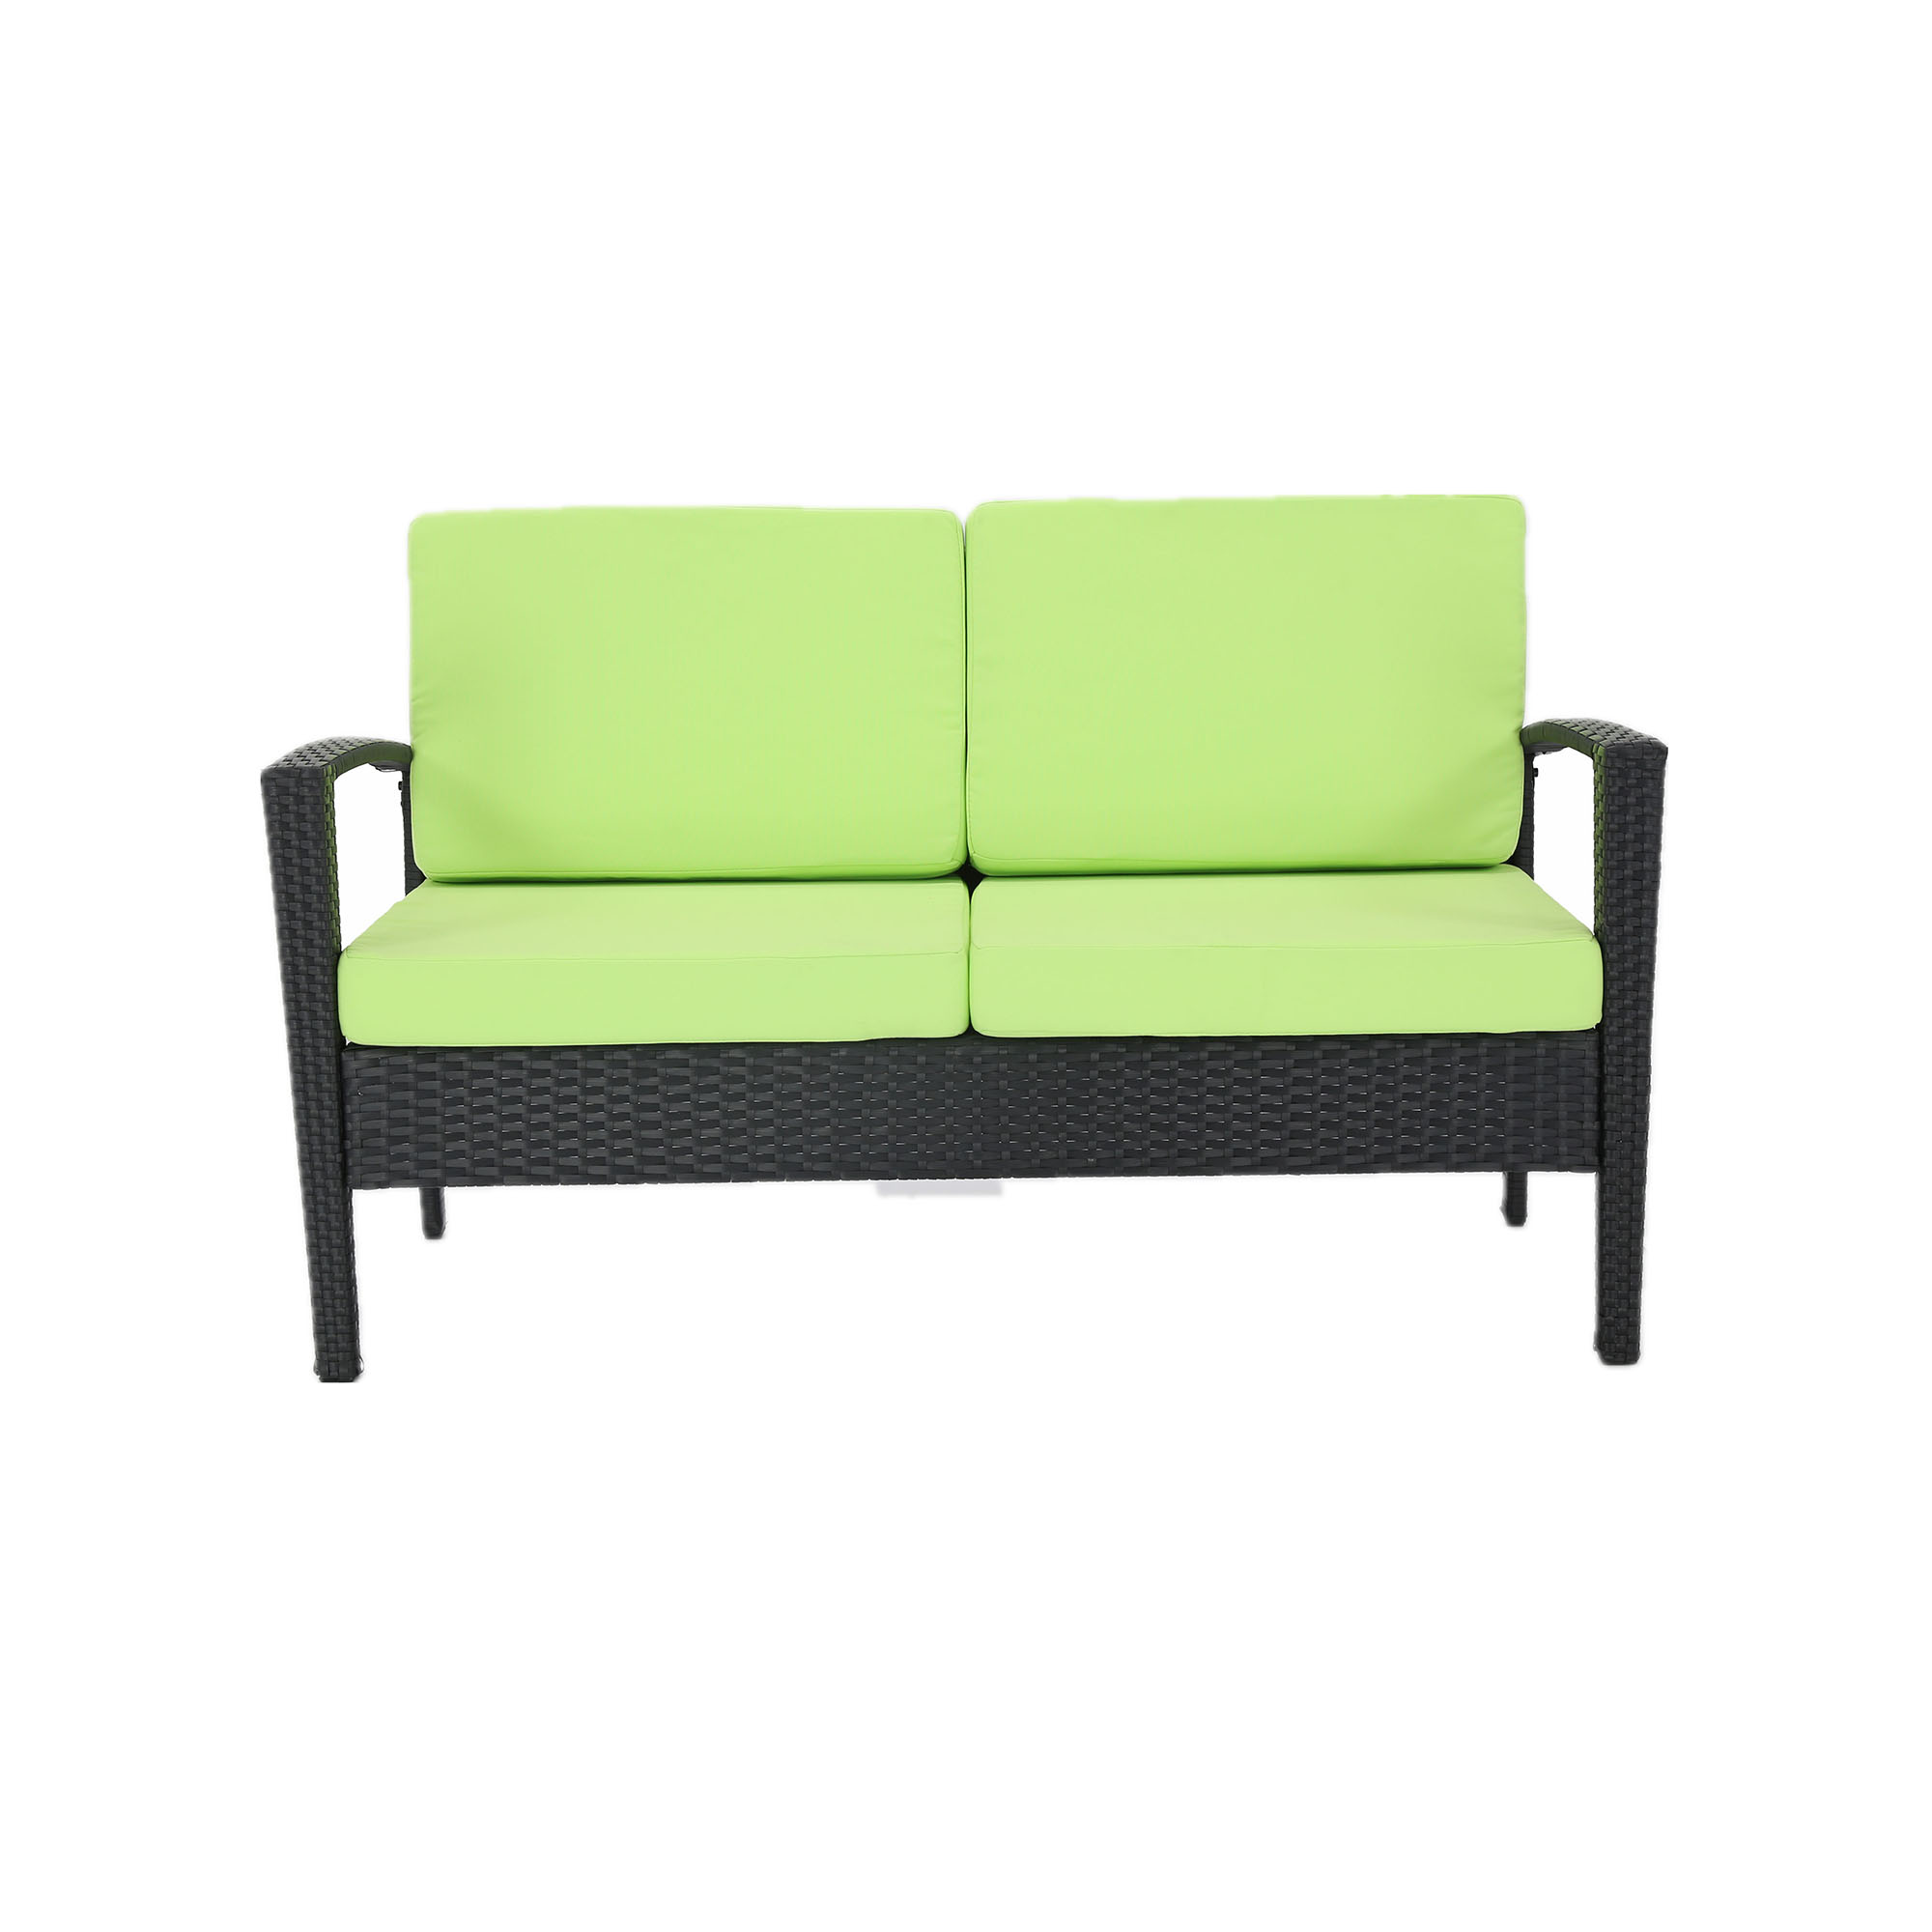 Baner Garden Wicker 4 Piece Black Patio Conversation Set with Green Cushions - image 3 of 11